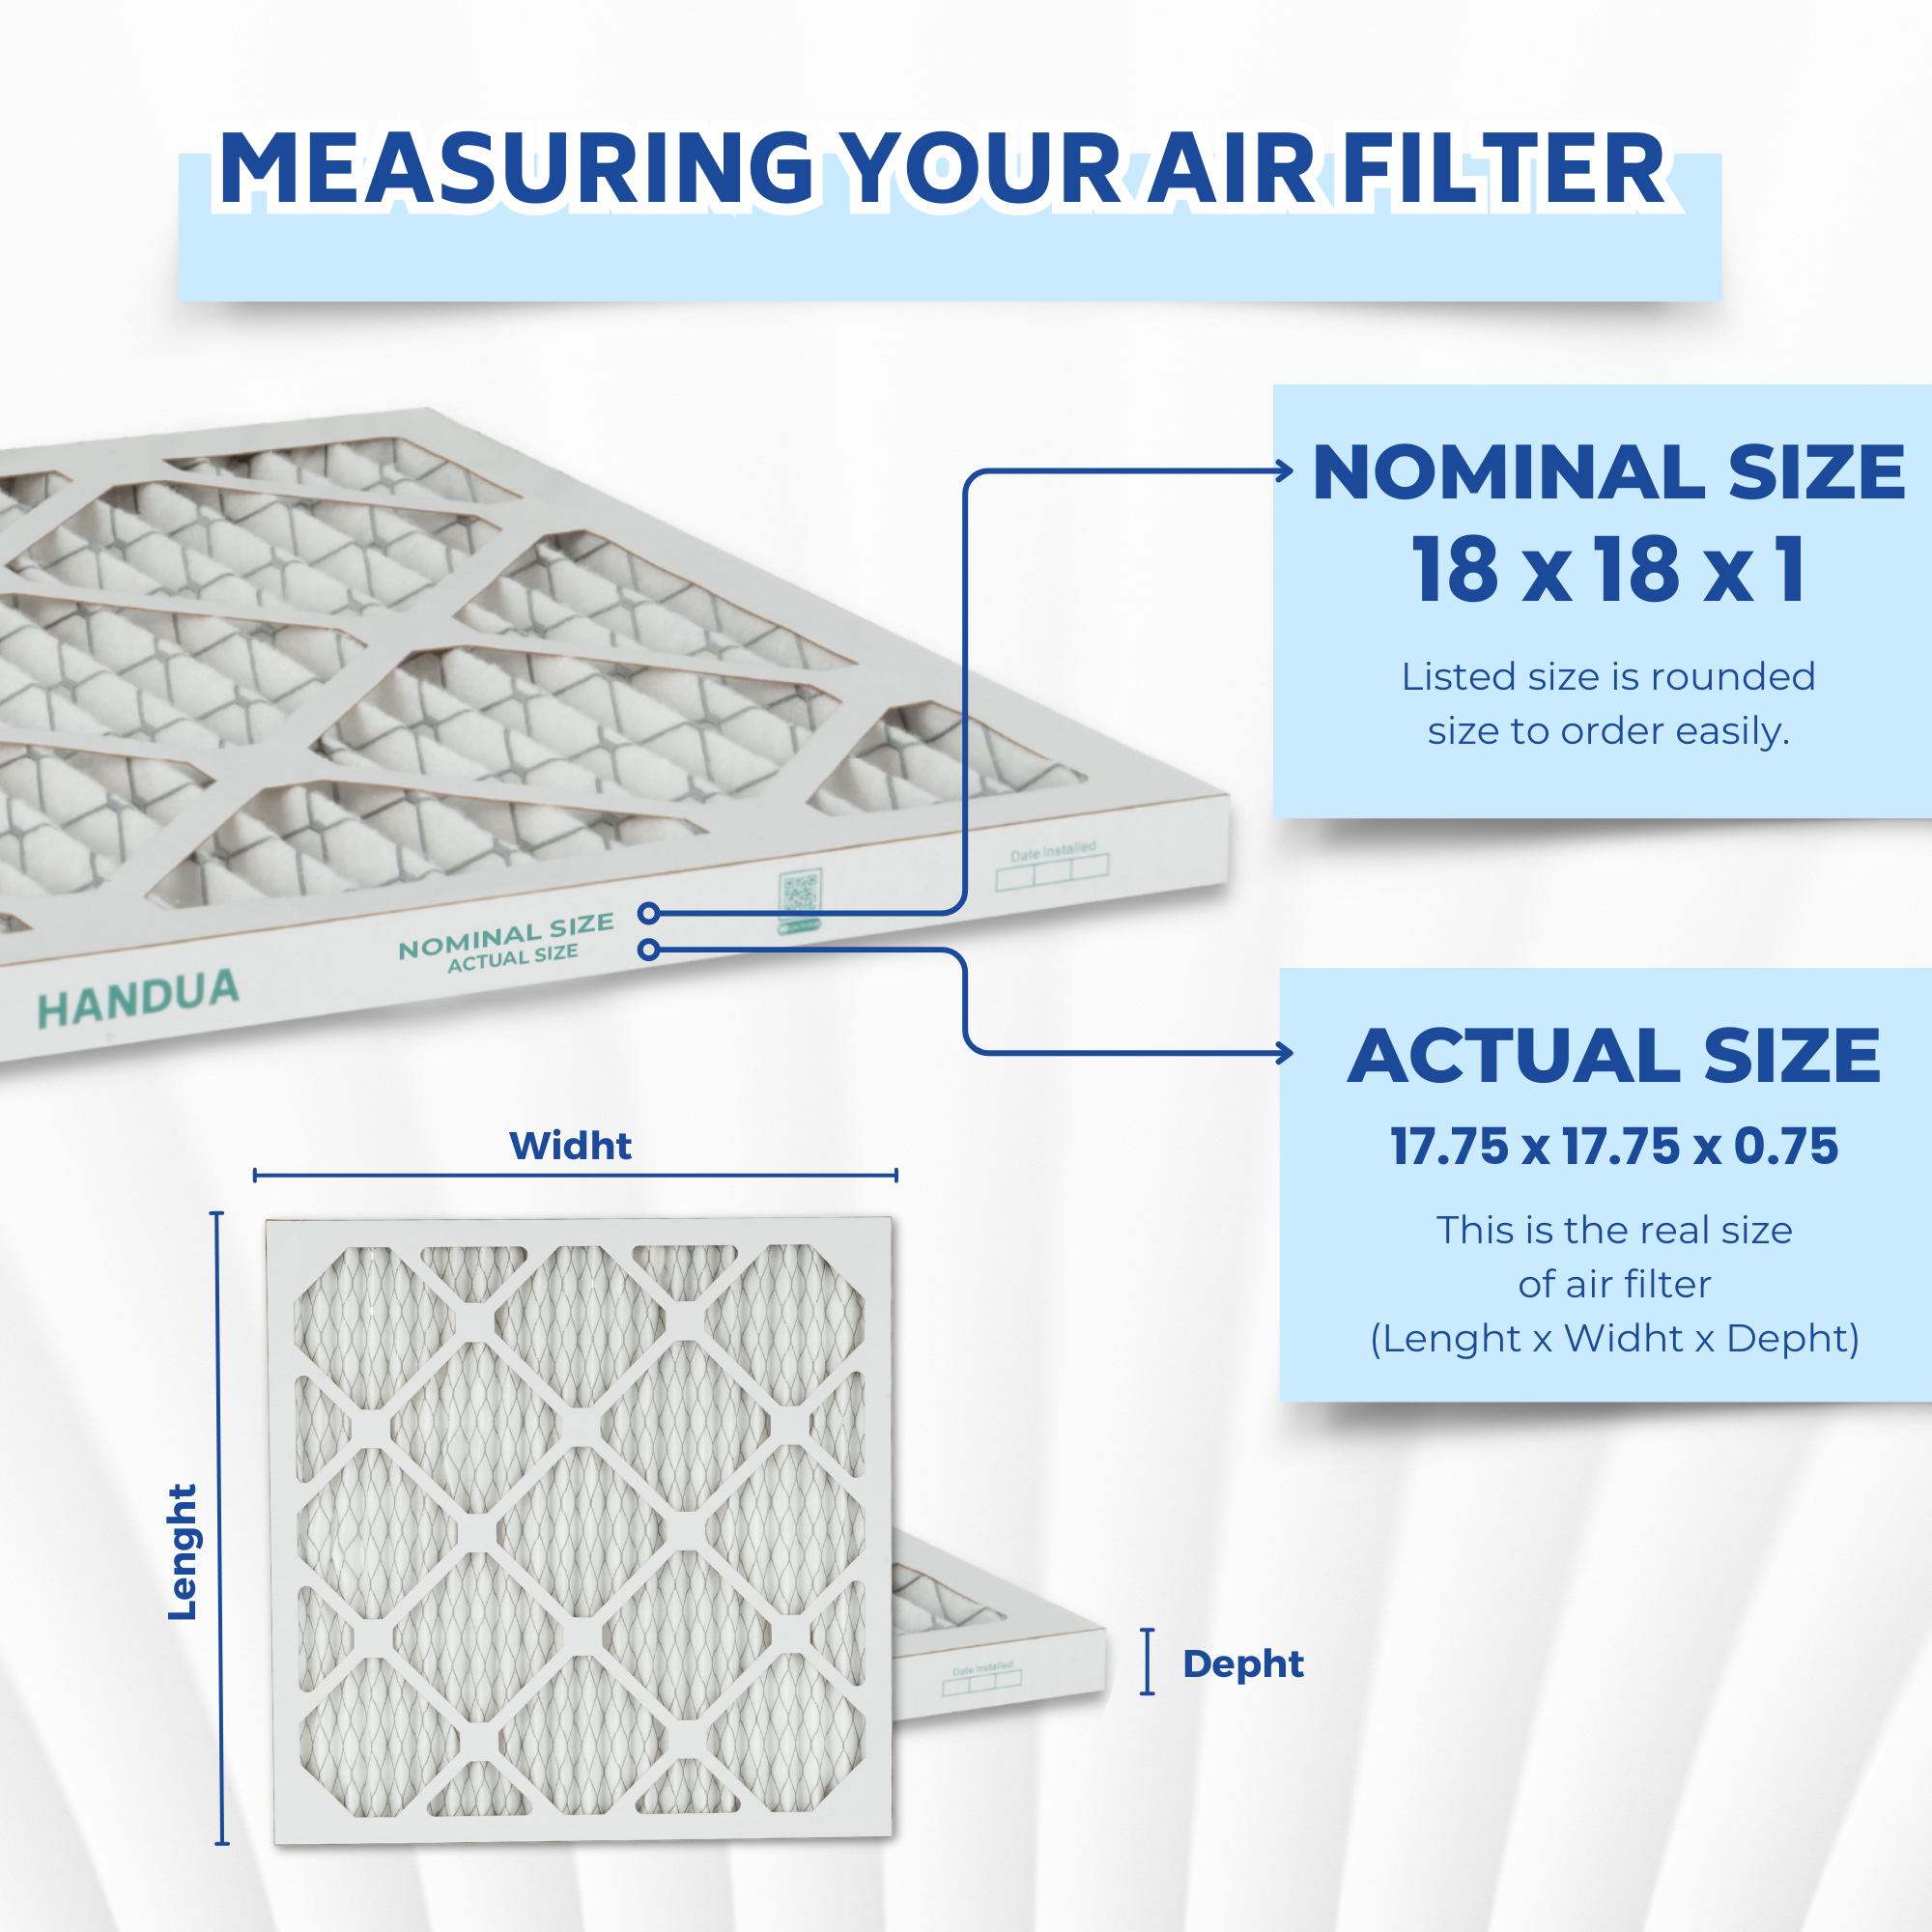 Handua 18x18x1 Air Filter MERV 8 Dust Control, Plated Furnace AC Air Replacement Filter, 4 Pack (Actual Size: 17.75" x 17.75" x 0.75")